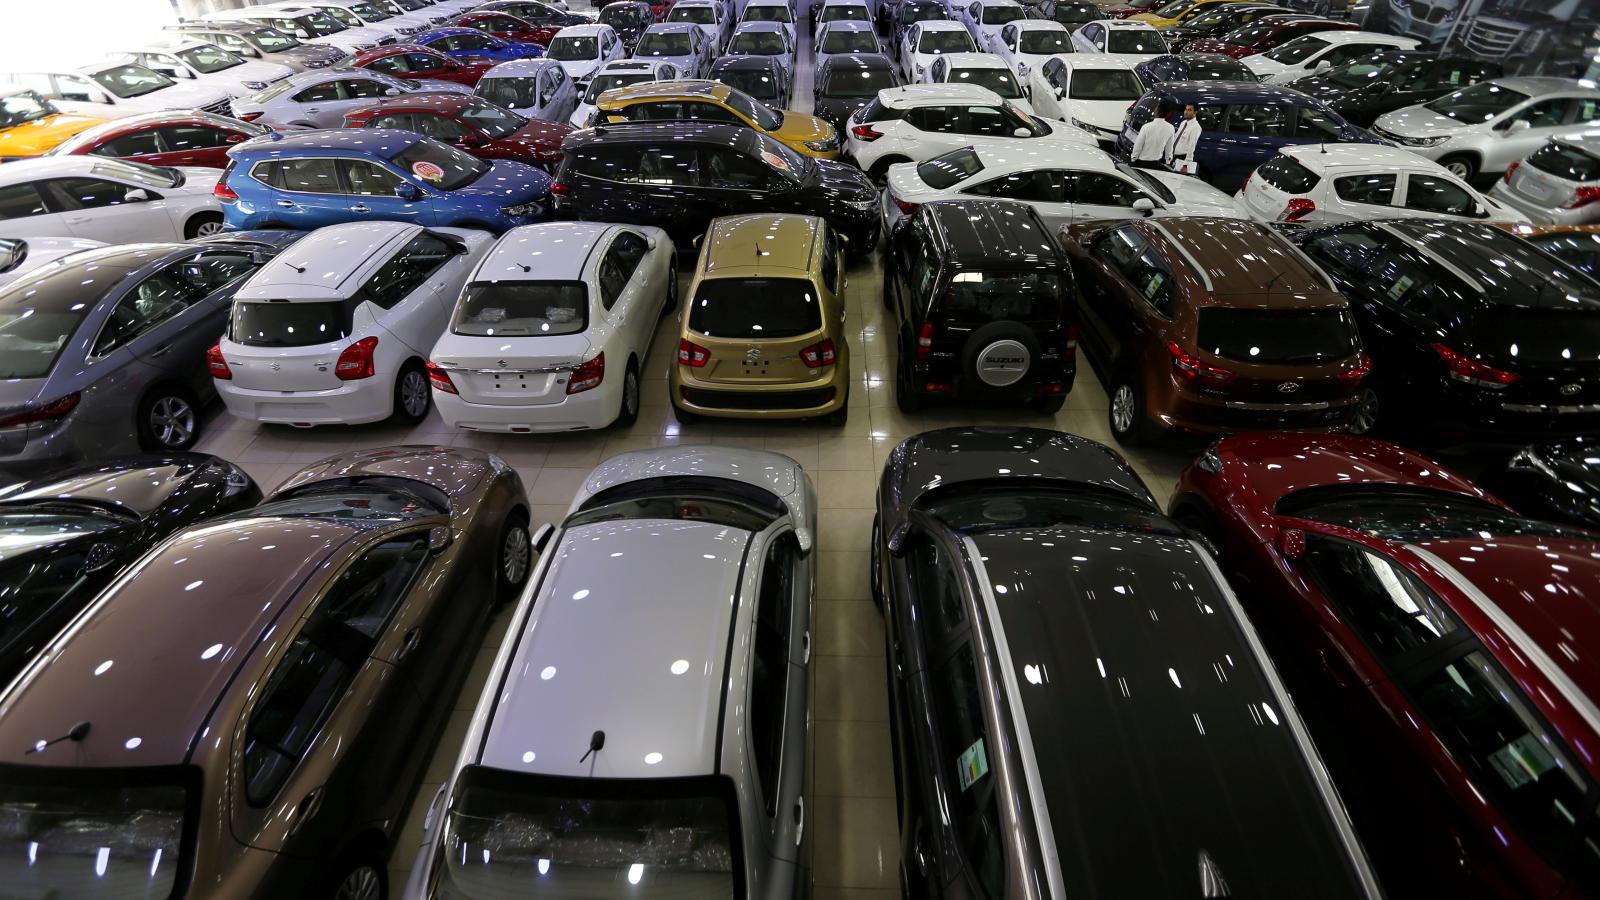 Maruti, Hyundai, Honda, Tata, Mercedes Sold Big On Dhanteras